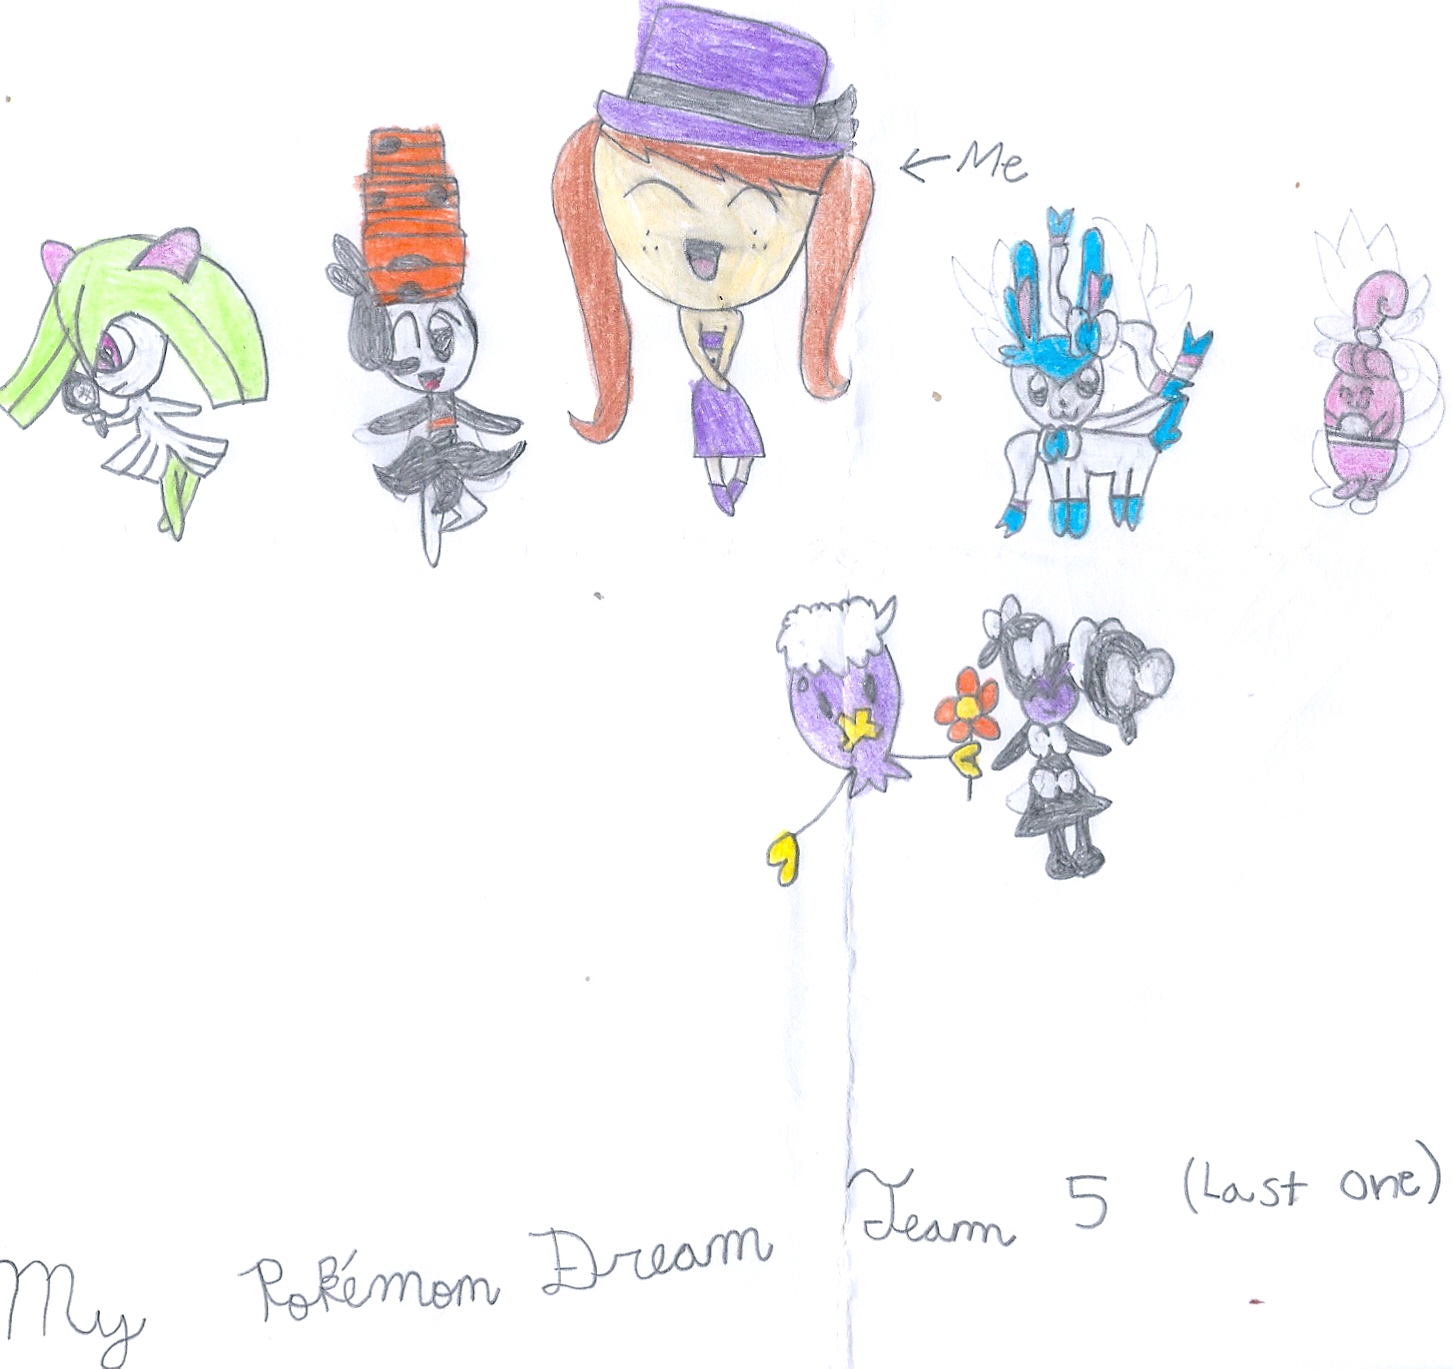 My pokemon dream team 5 last one 894310001.jpg